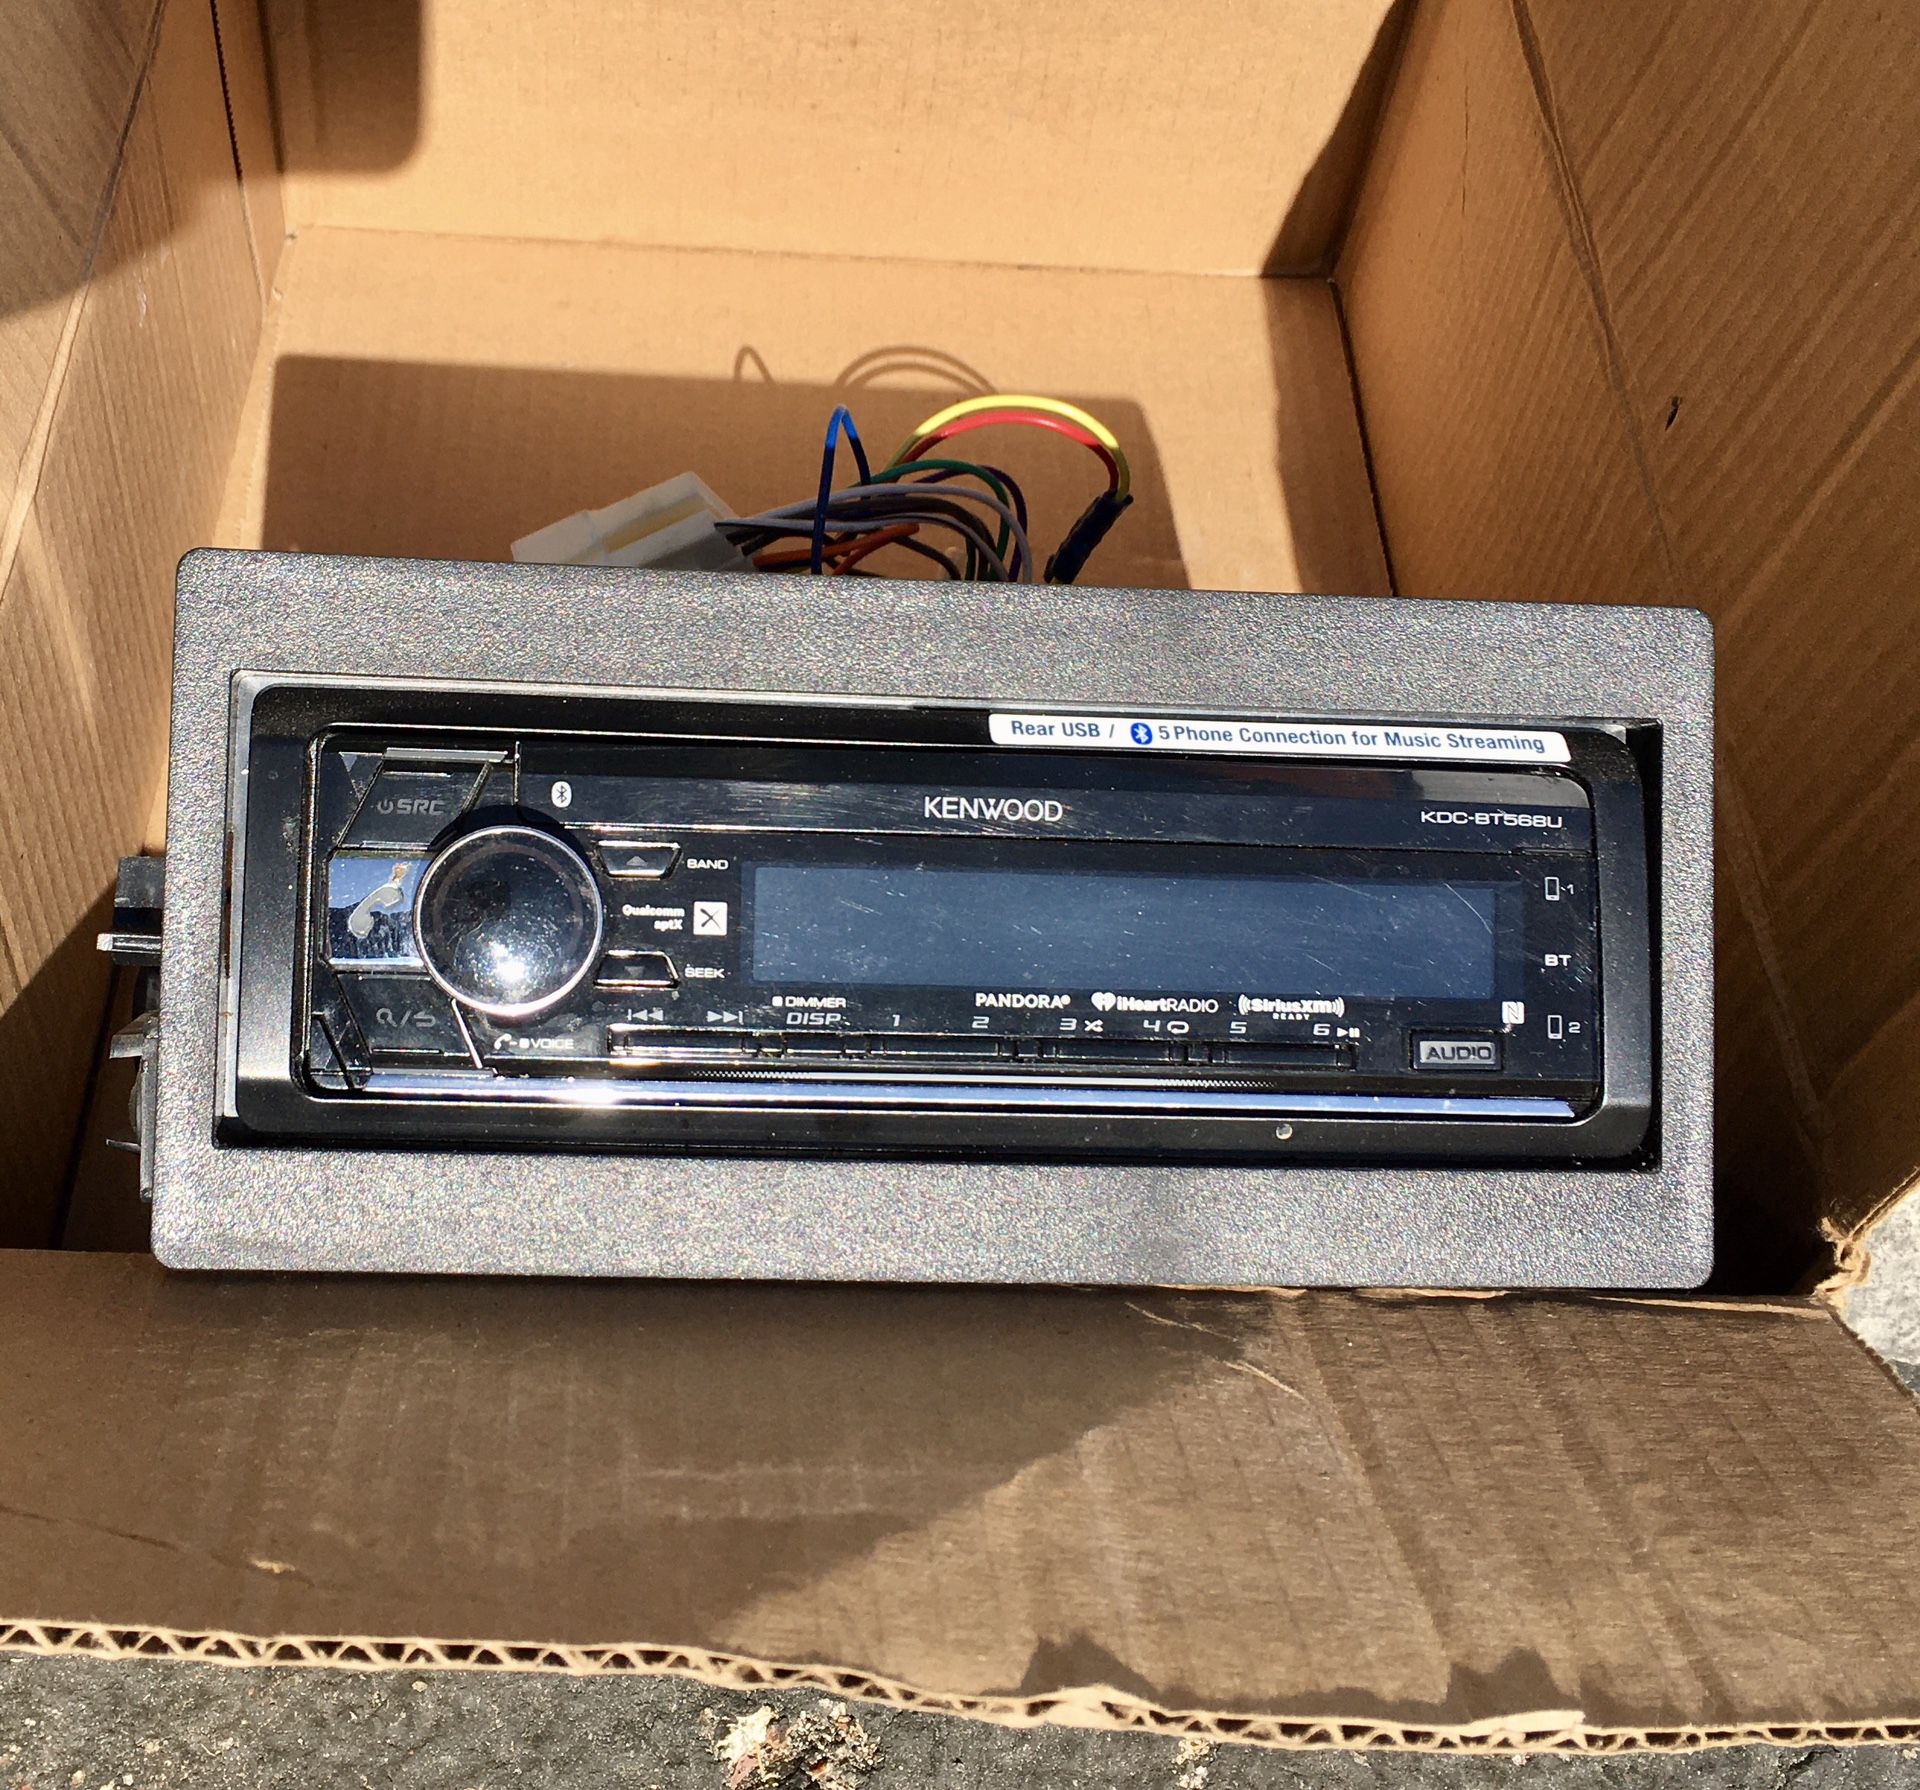 Kenwood KDC-BT568U In-Dash CD/DM Car Audio Receiver Housing Unit And Remote